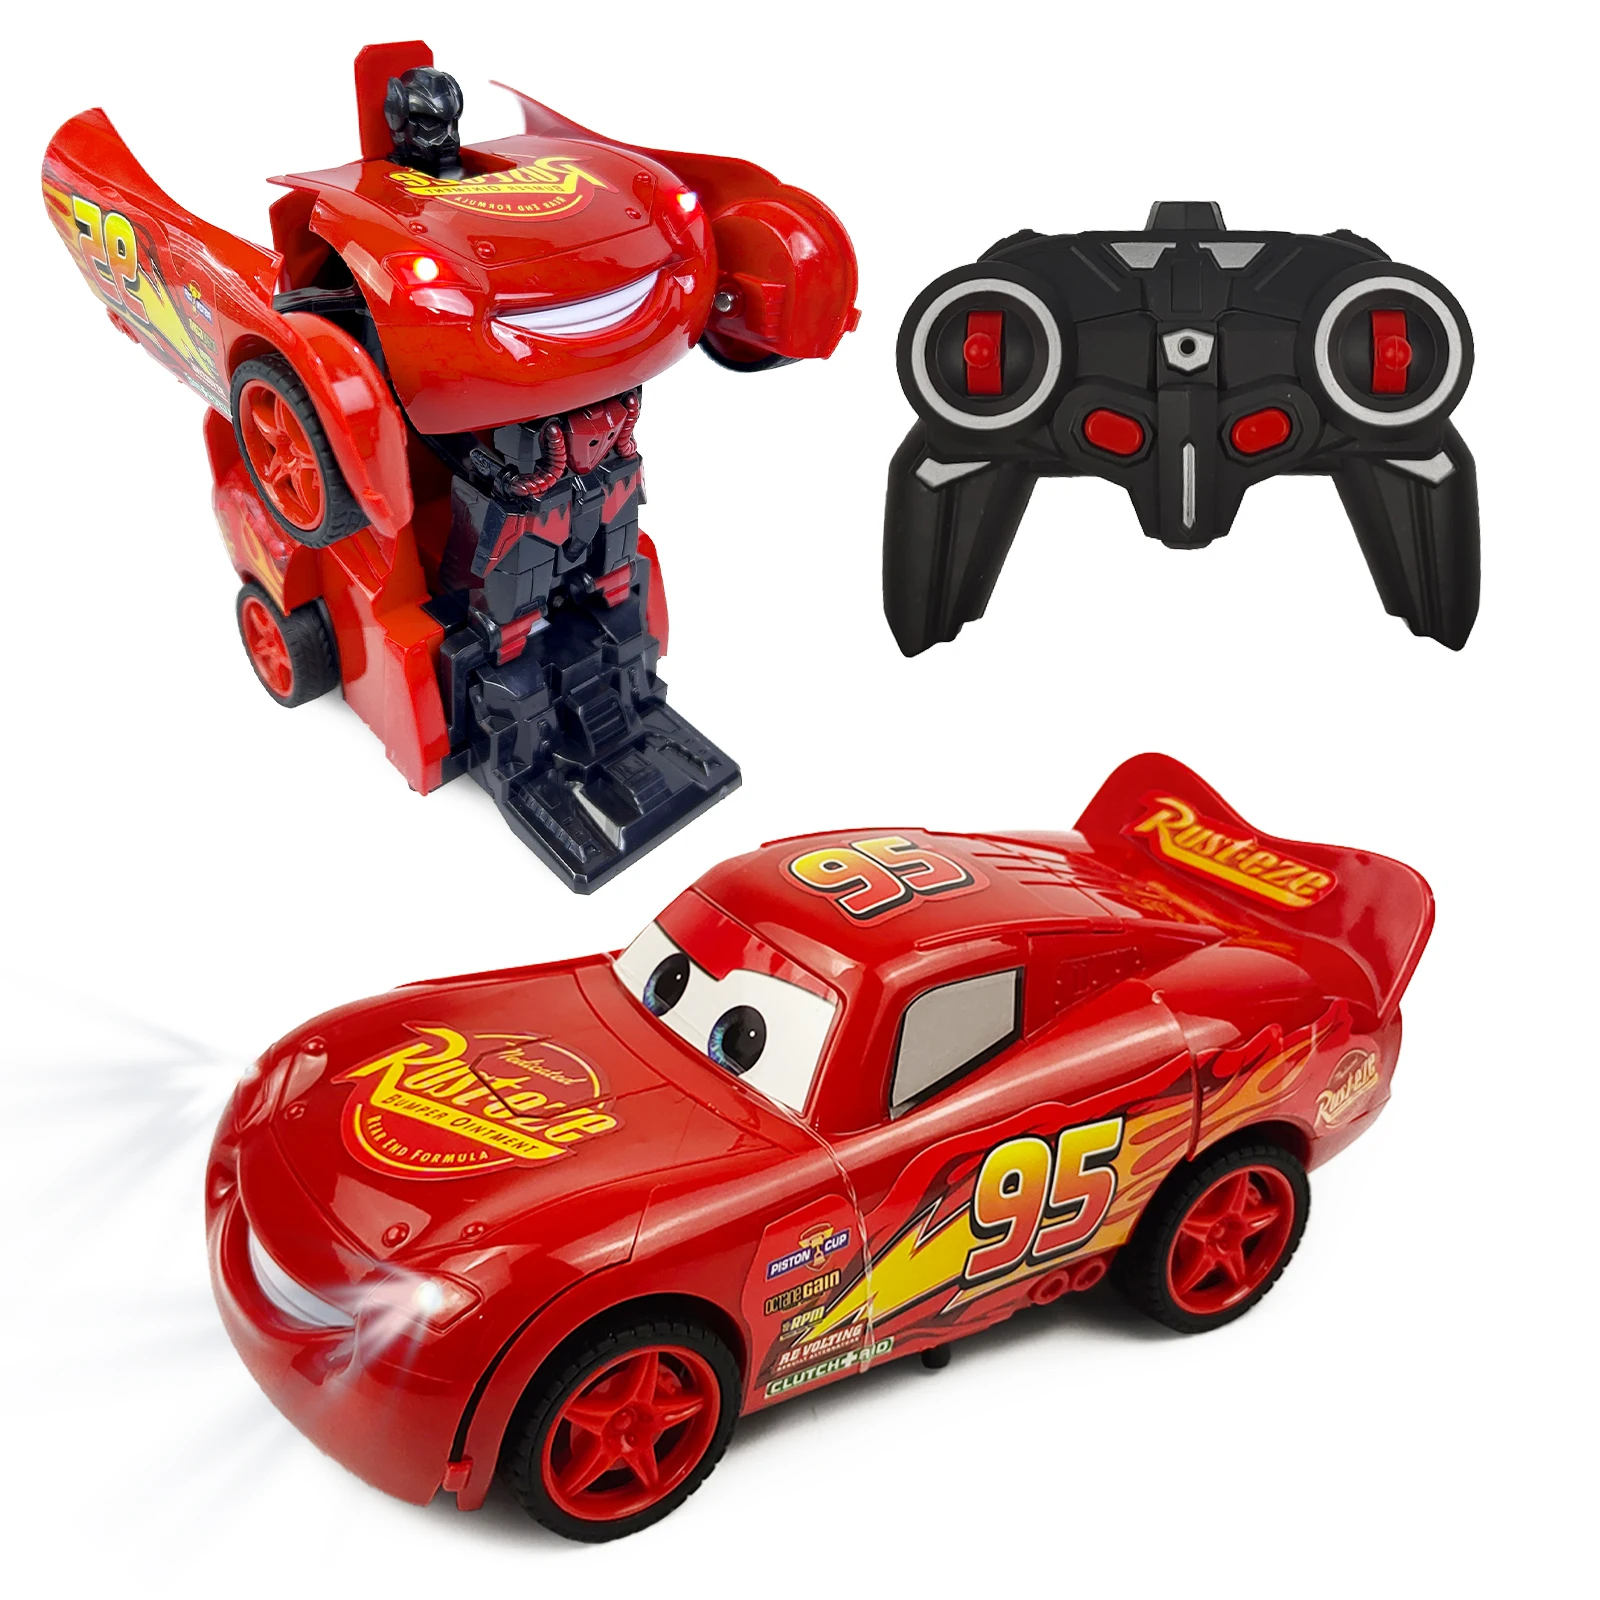 

Disney Lightning McQueen Remote Control Car 2in1 Transform Robot RC Cars Deformation Car Model Toy One Button Transformation